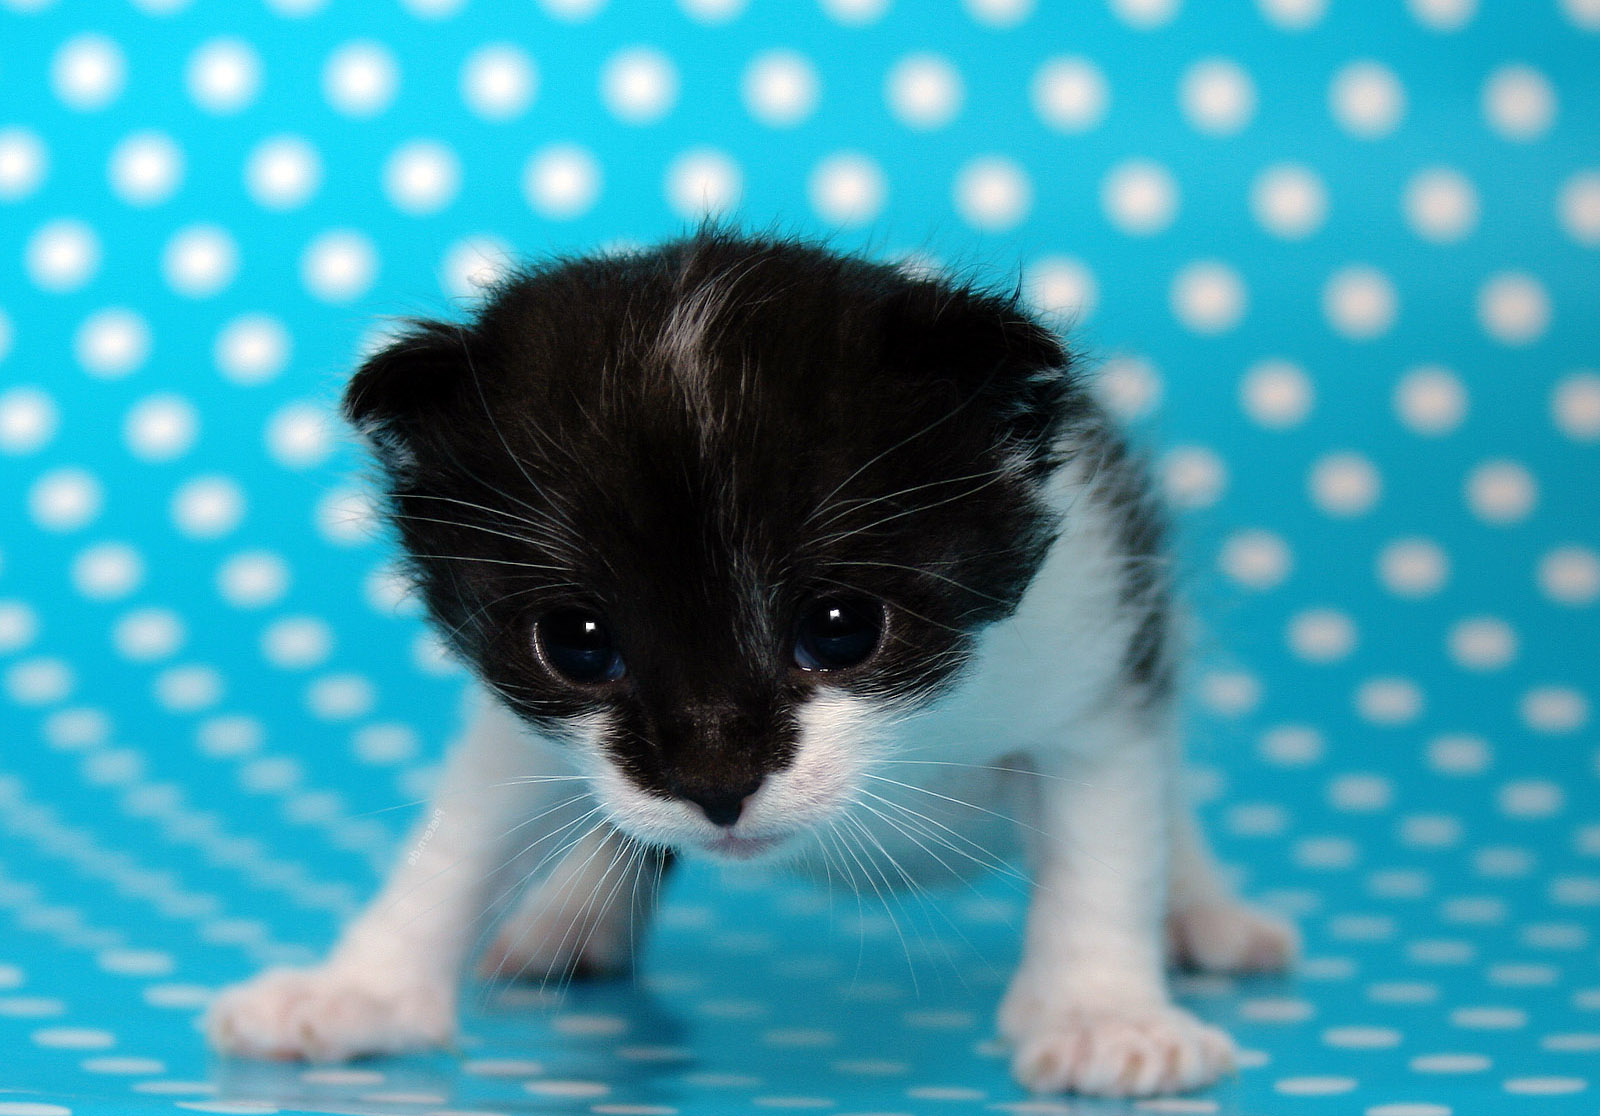 Newborn Kitten On The Dots Wallpaper